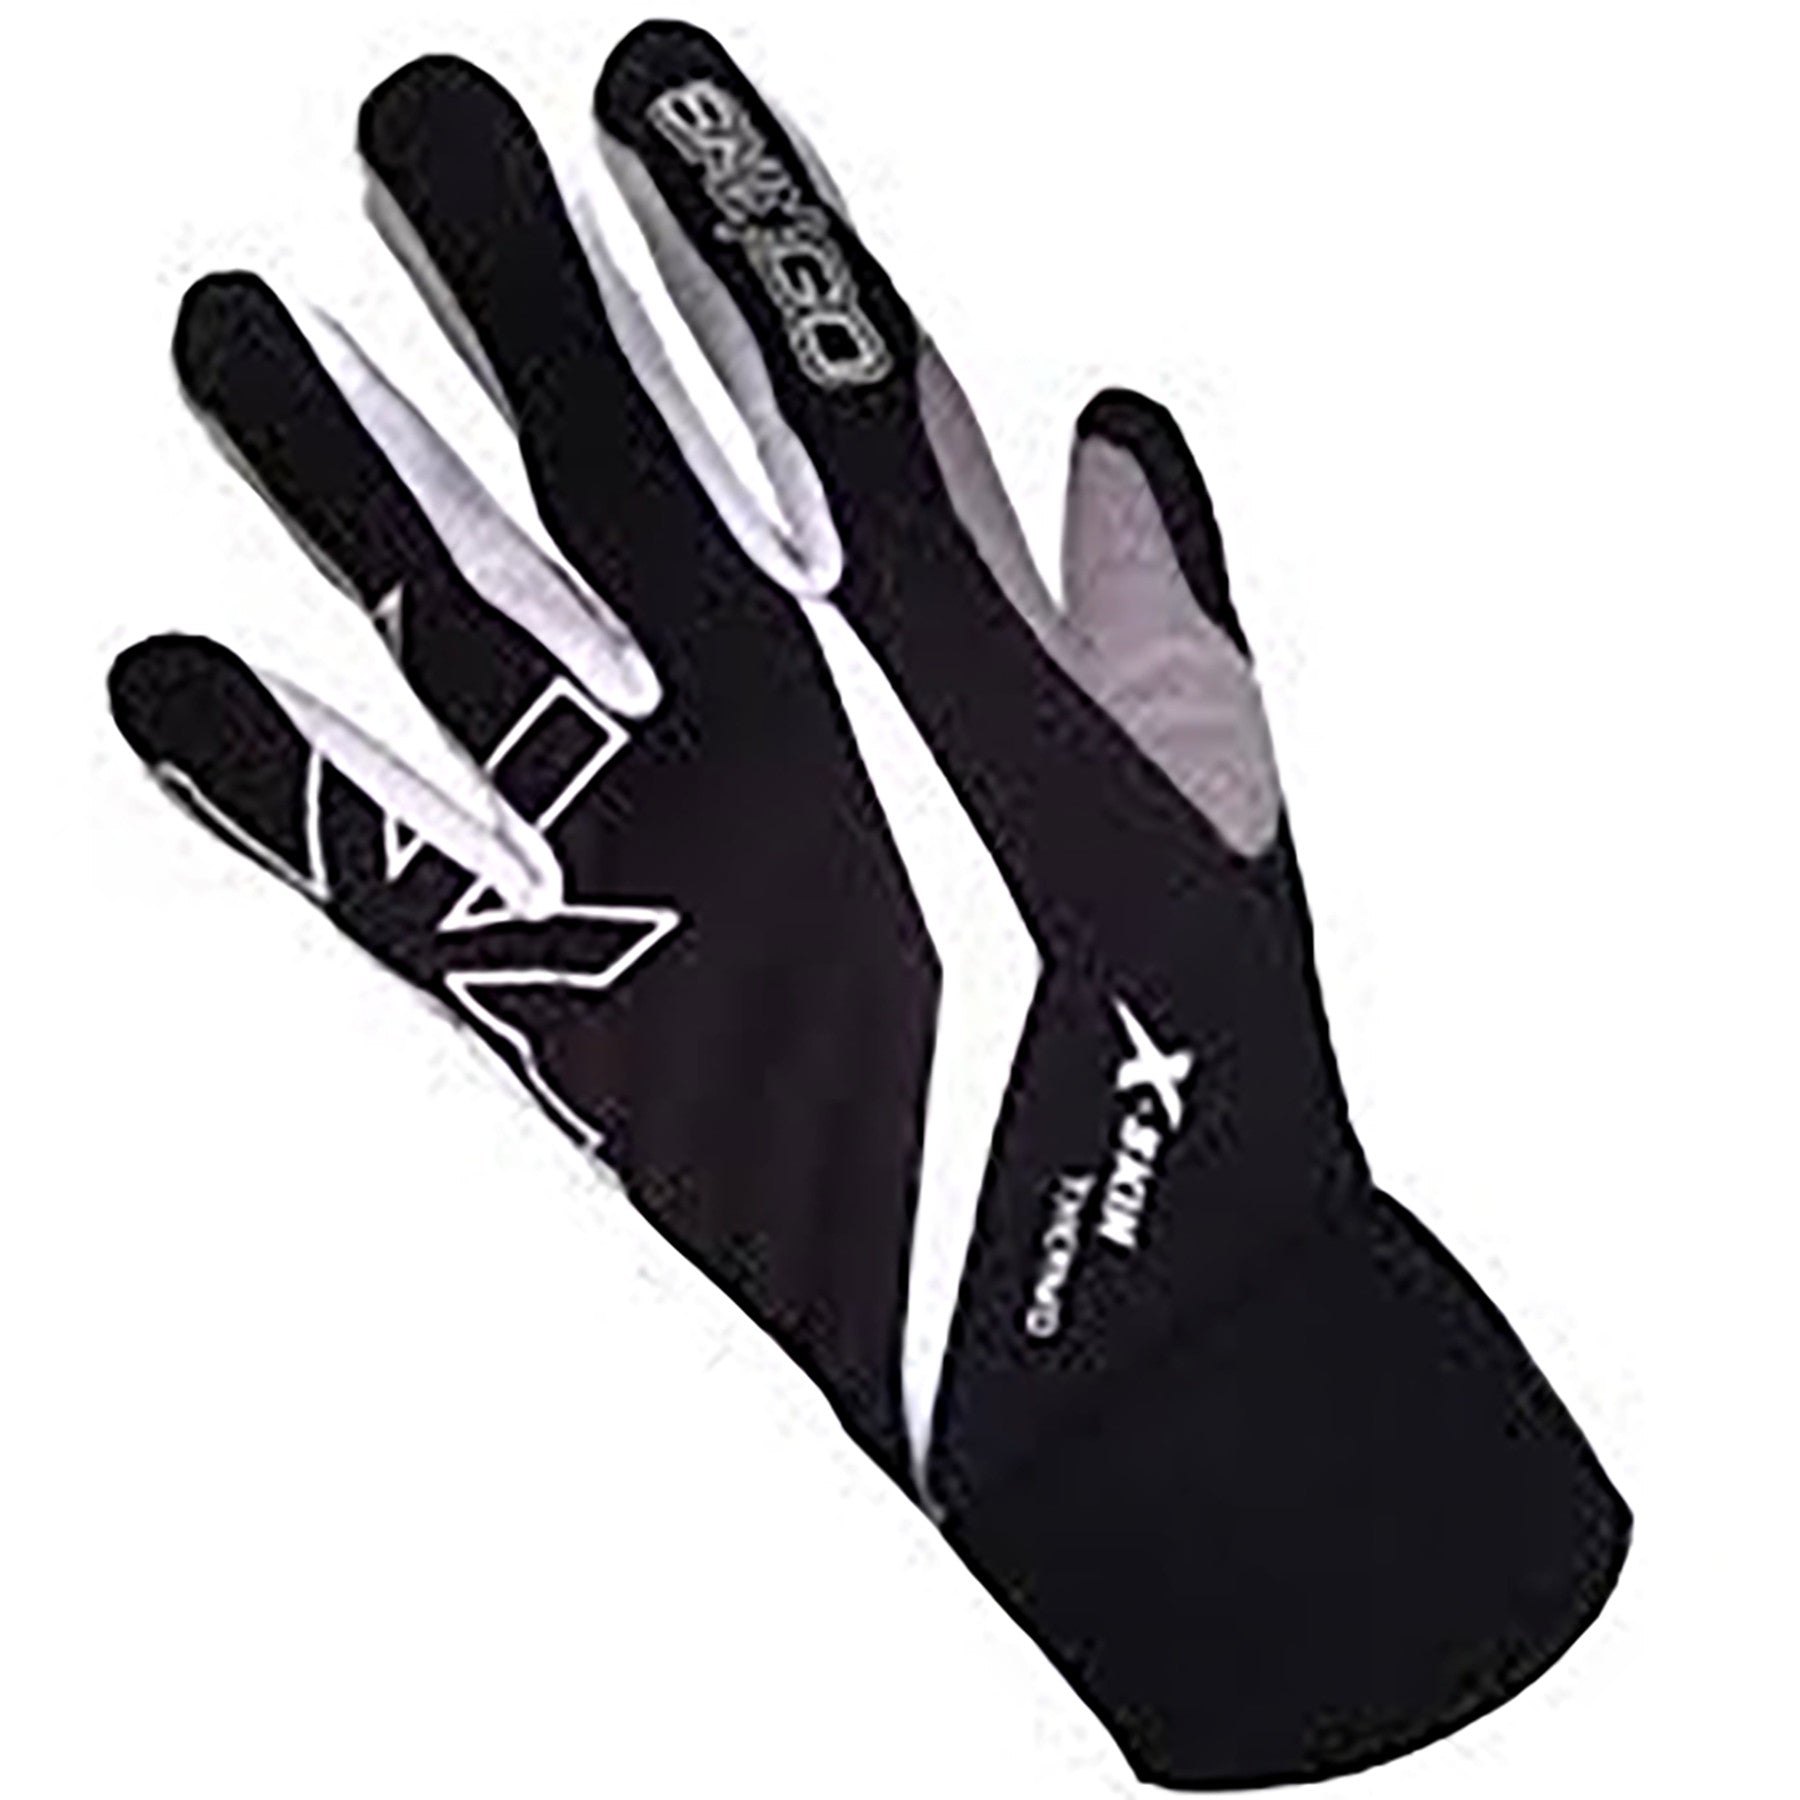 SkiGo X-Skin Thermo Glove